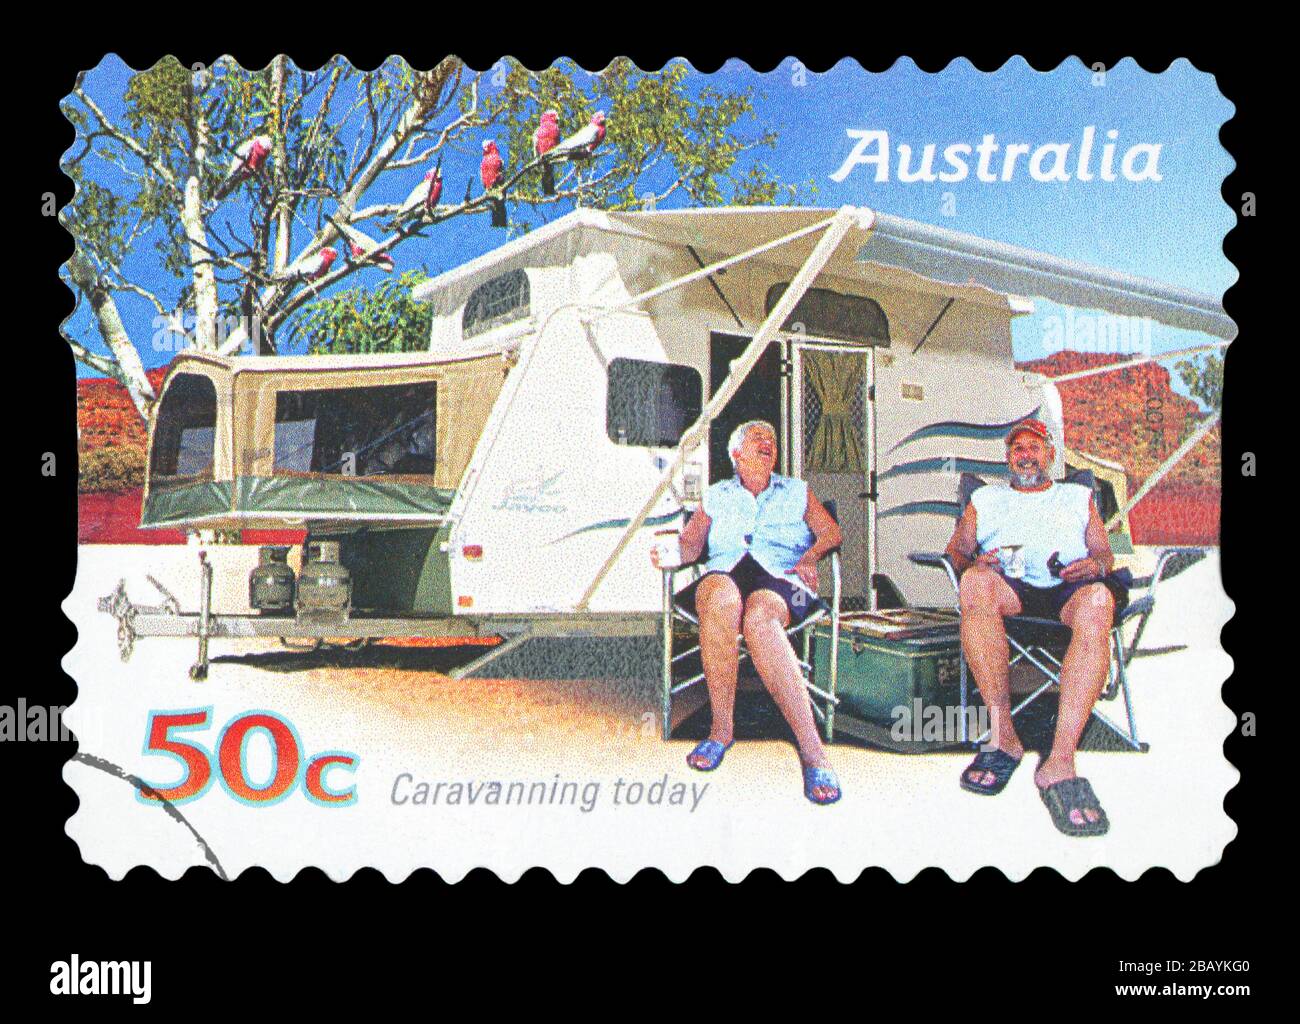 AUSTRALIA - CIRCA 2007: A stamp printed in Australia shows Family enjoying a caravan, caravanning today, circa 2007 Stock Photo